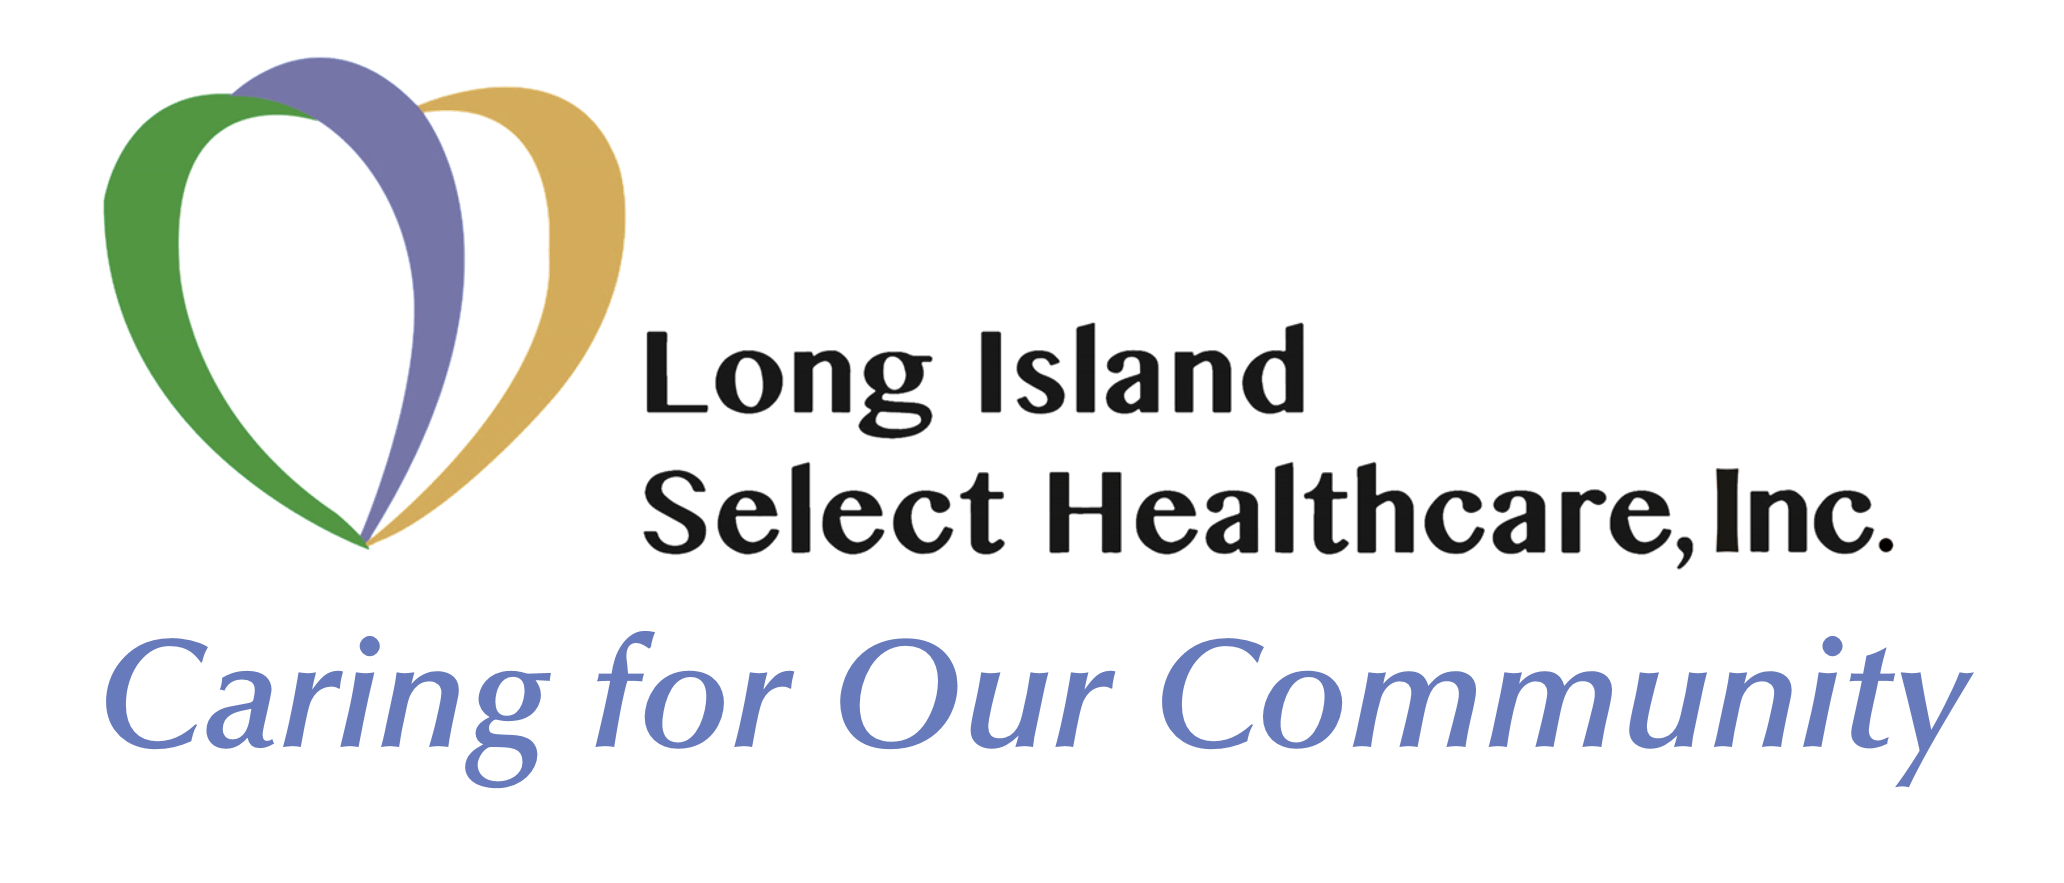 Long Island Select Healthcare. Inc. logo